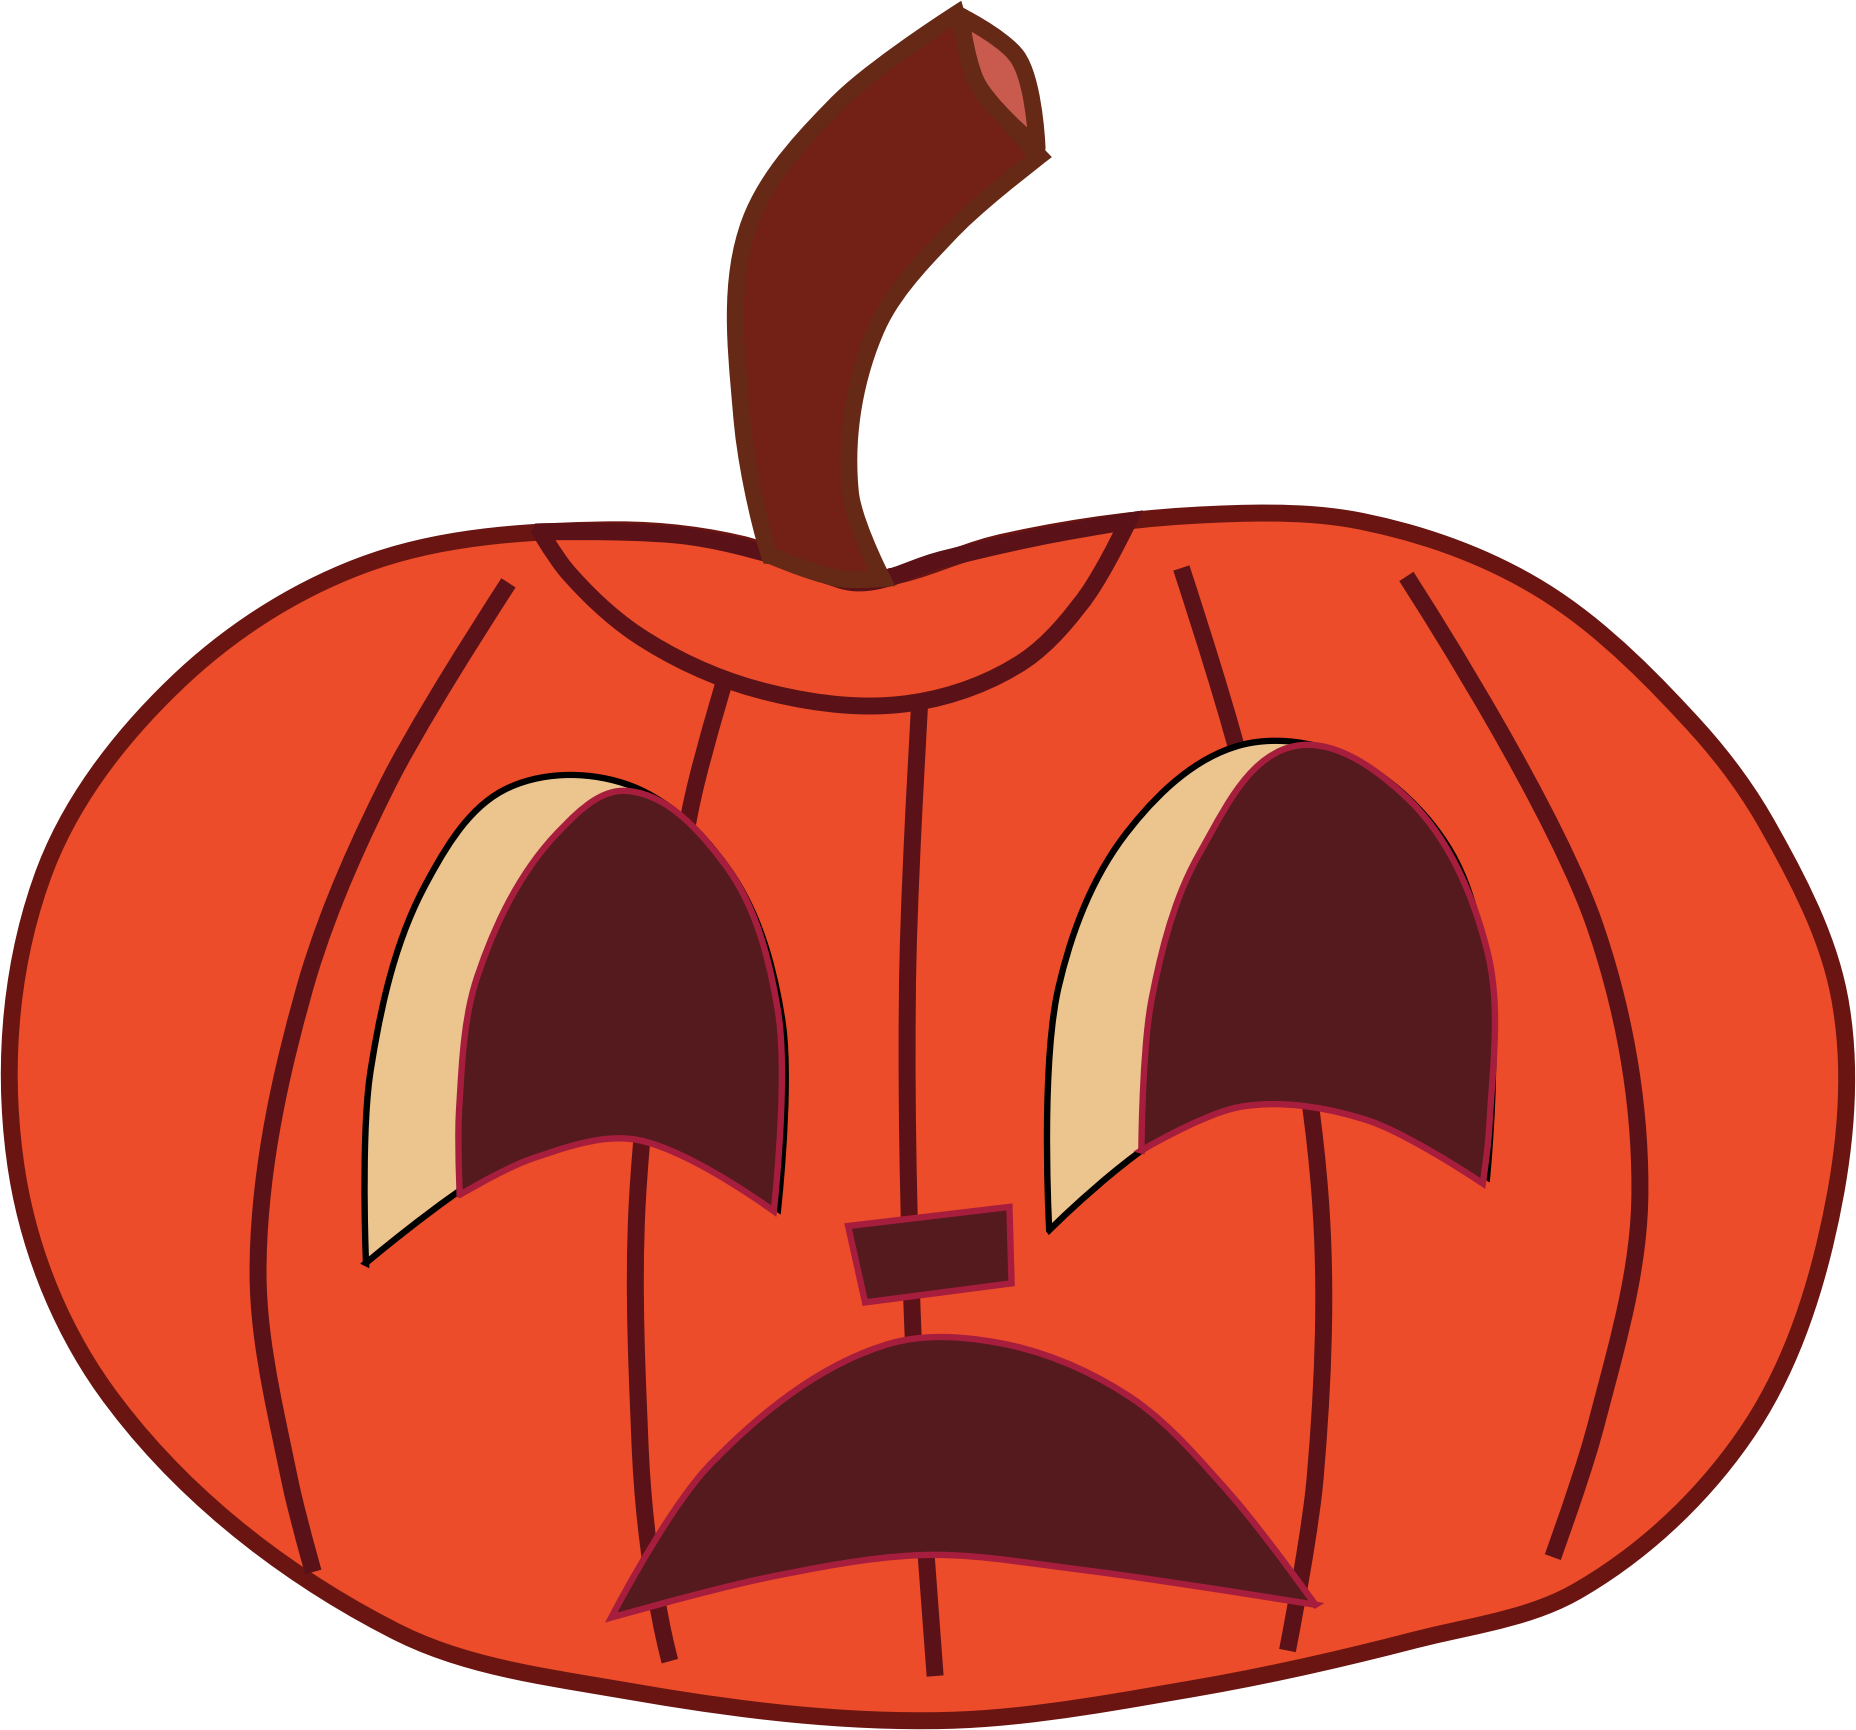 Halloween visage PNG image